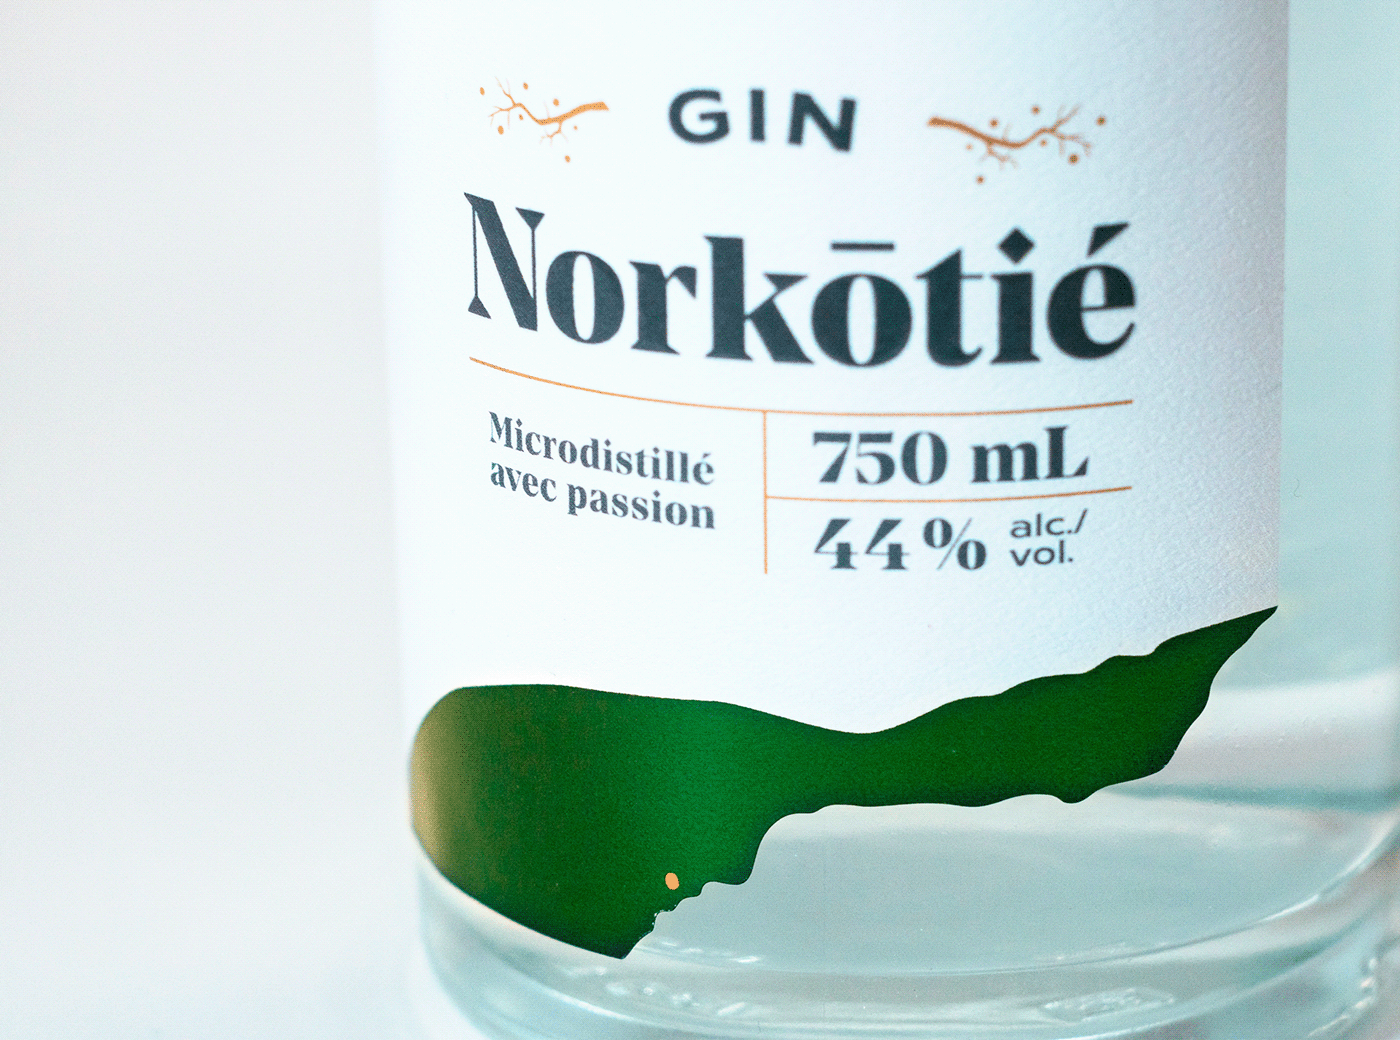 alcohol bottle branding  côte-nord gin norkotié Packaging